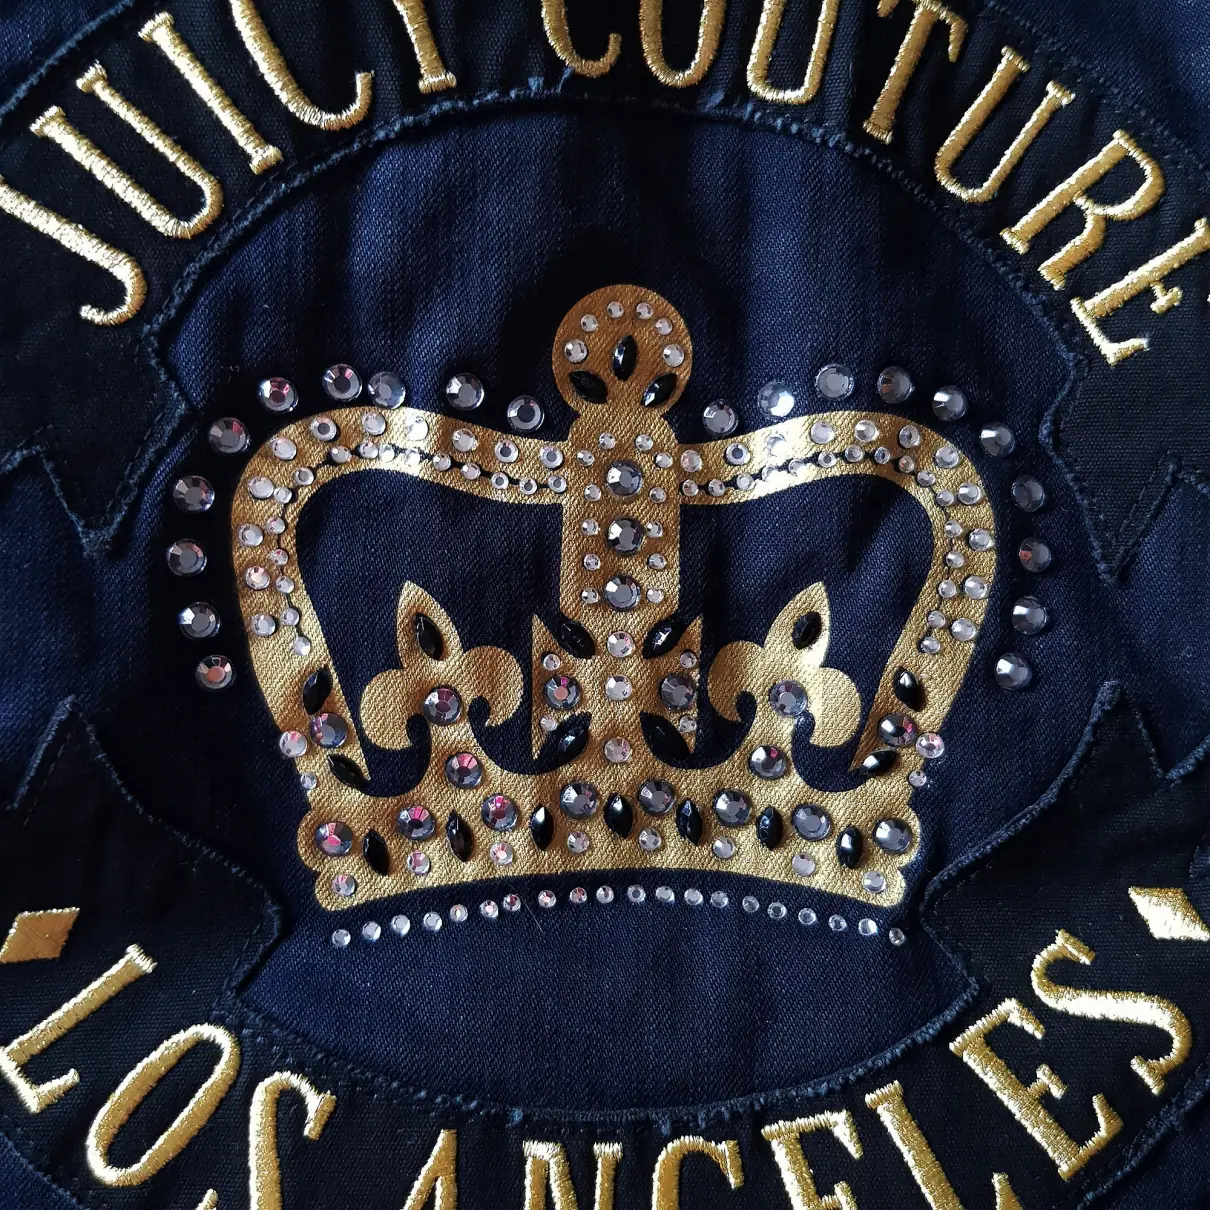 Jacket Juicy Couture